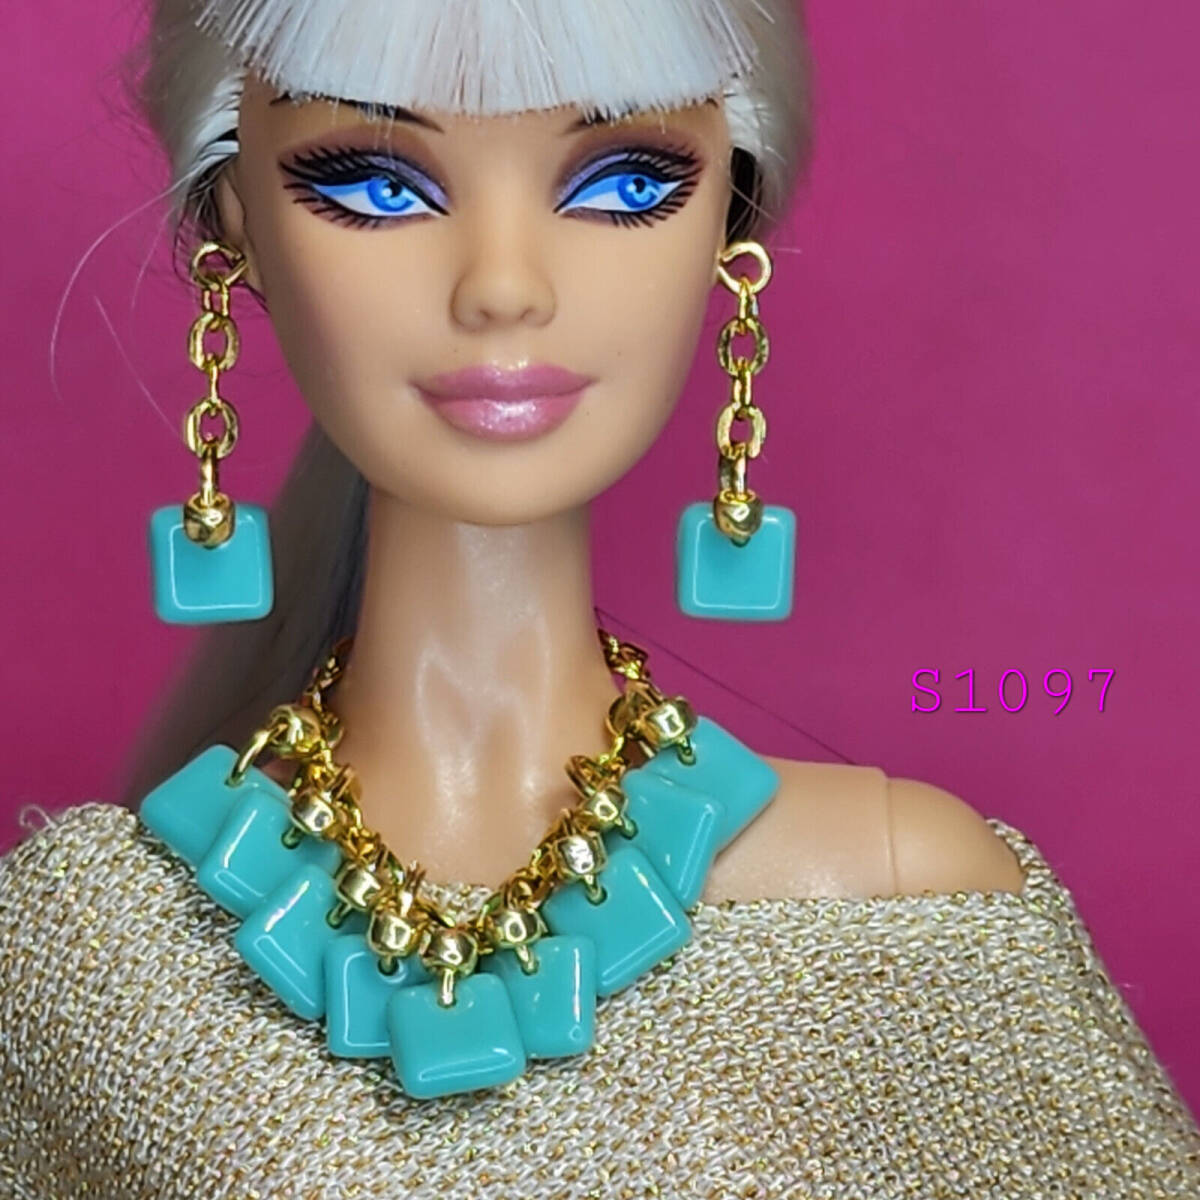 doll jewelry, Barbie Silkstone Fashion Royalty jewellery for 11.5" doll [S1097] 海外 即決_doll jewelry, Bar 1